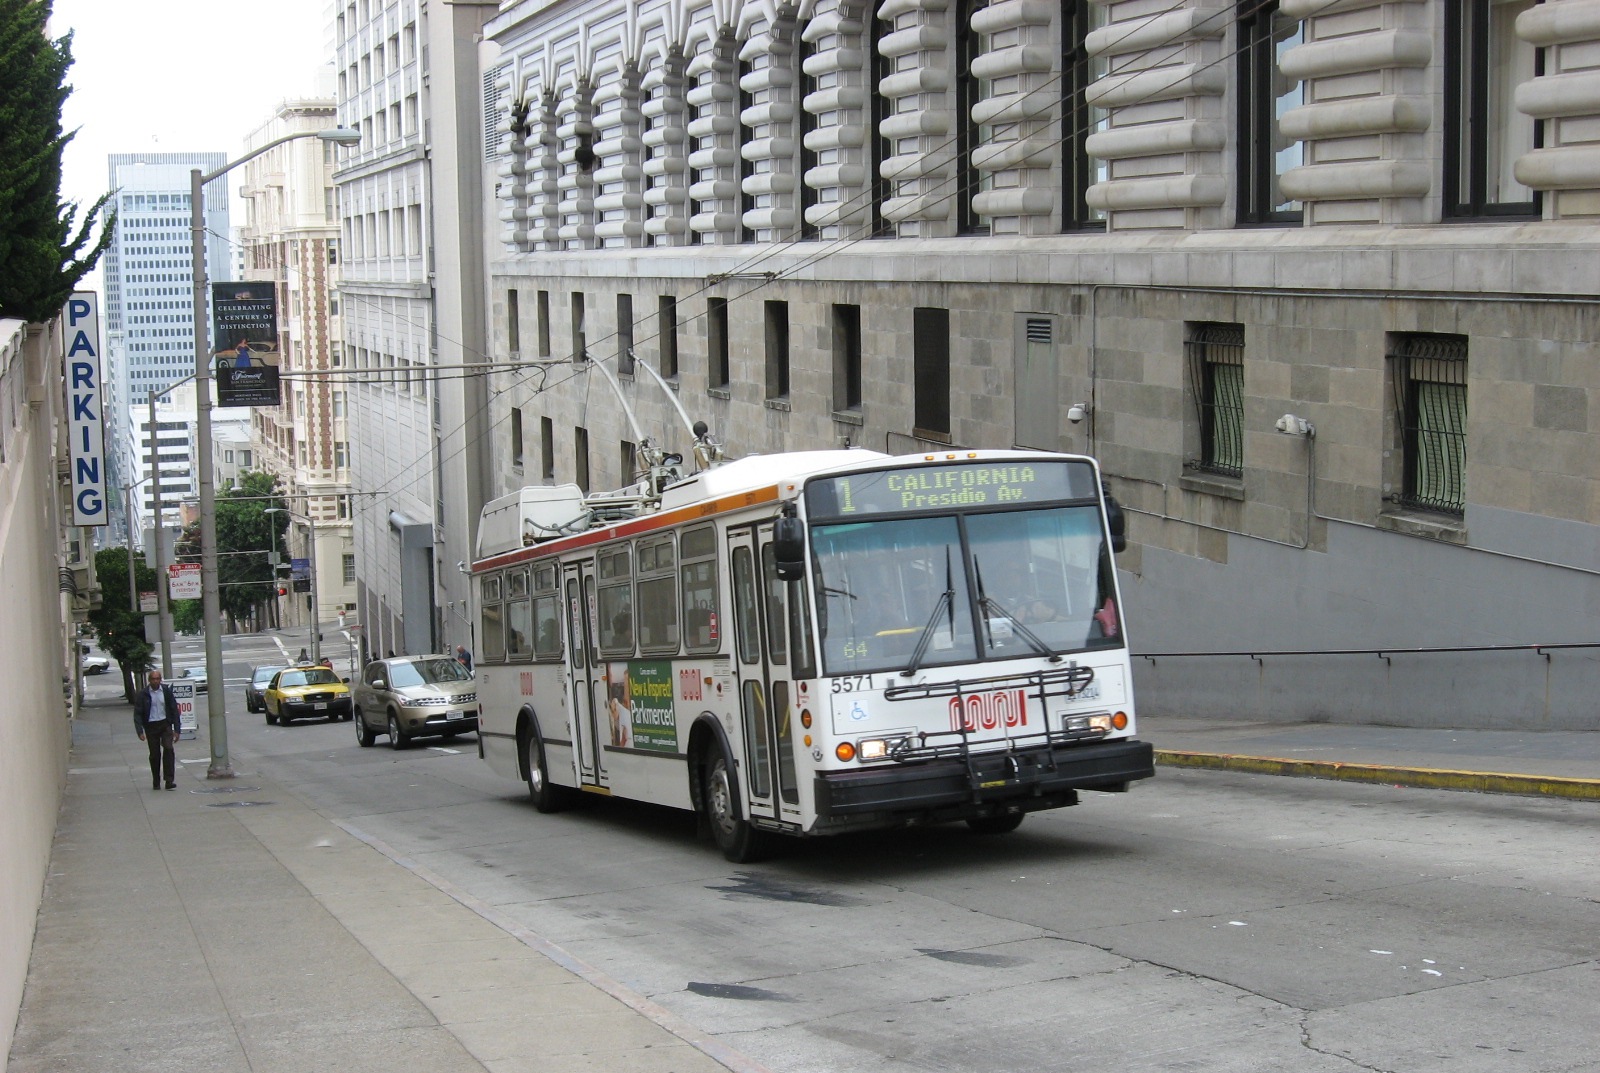 ETI_trolleybus_5571_on_steep_section_of_Sacramento_St_west_of_Powell_St,_San_Francisco_(2007)